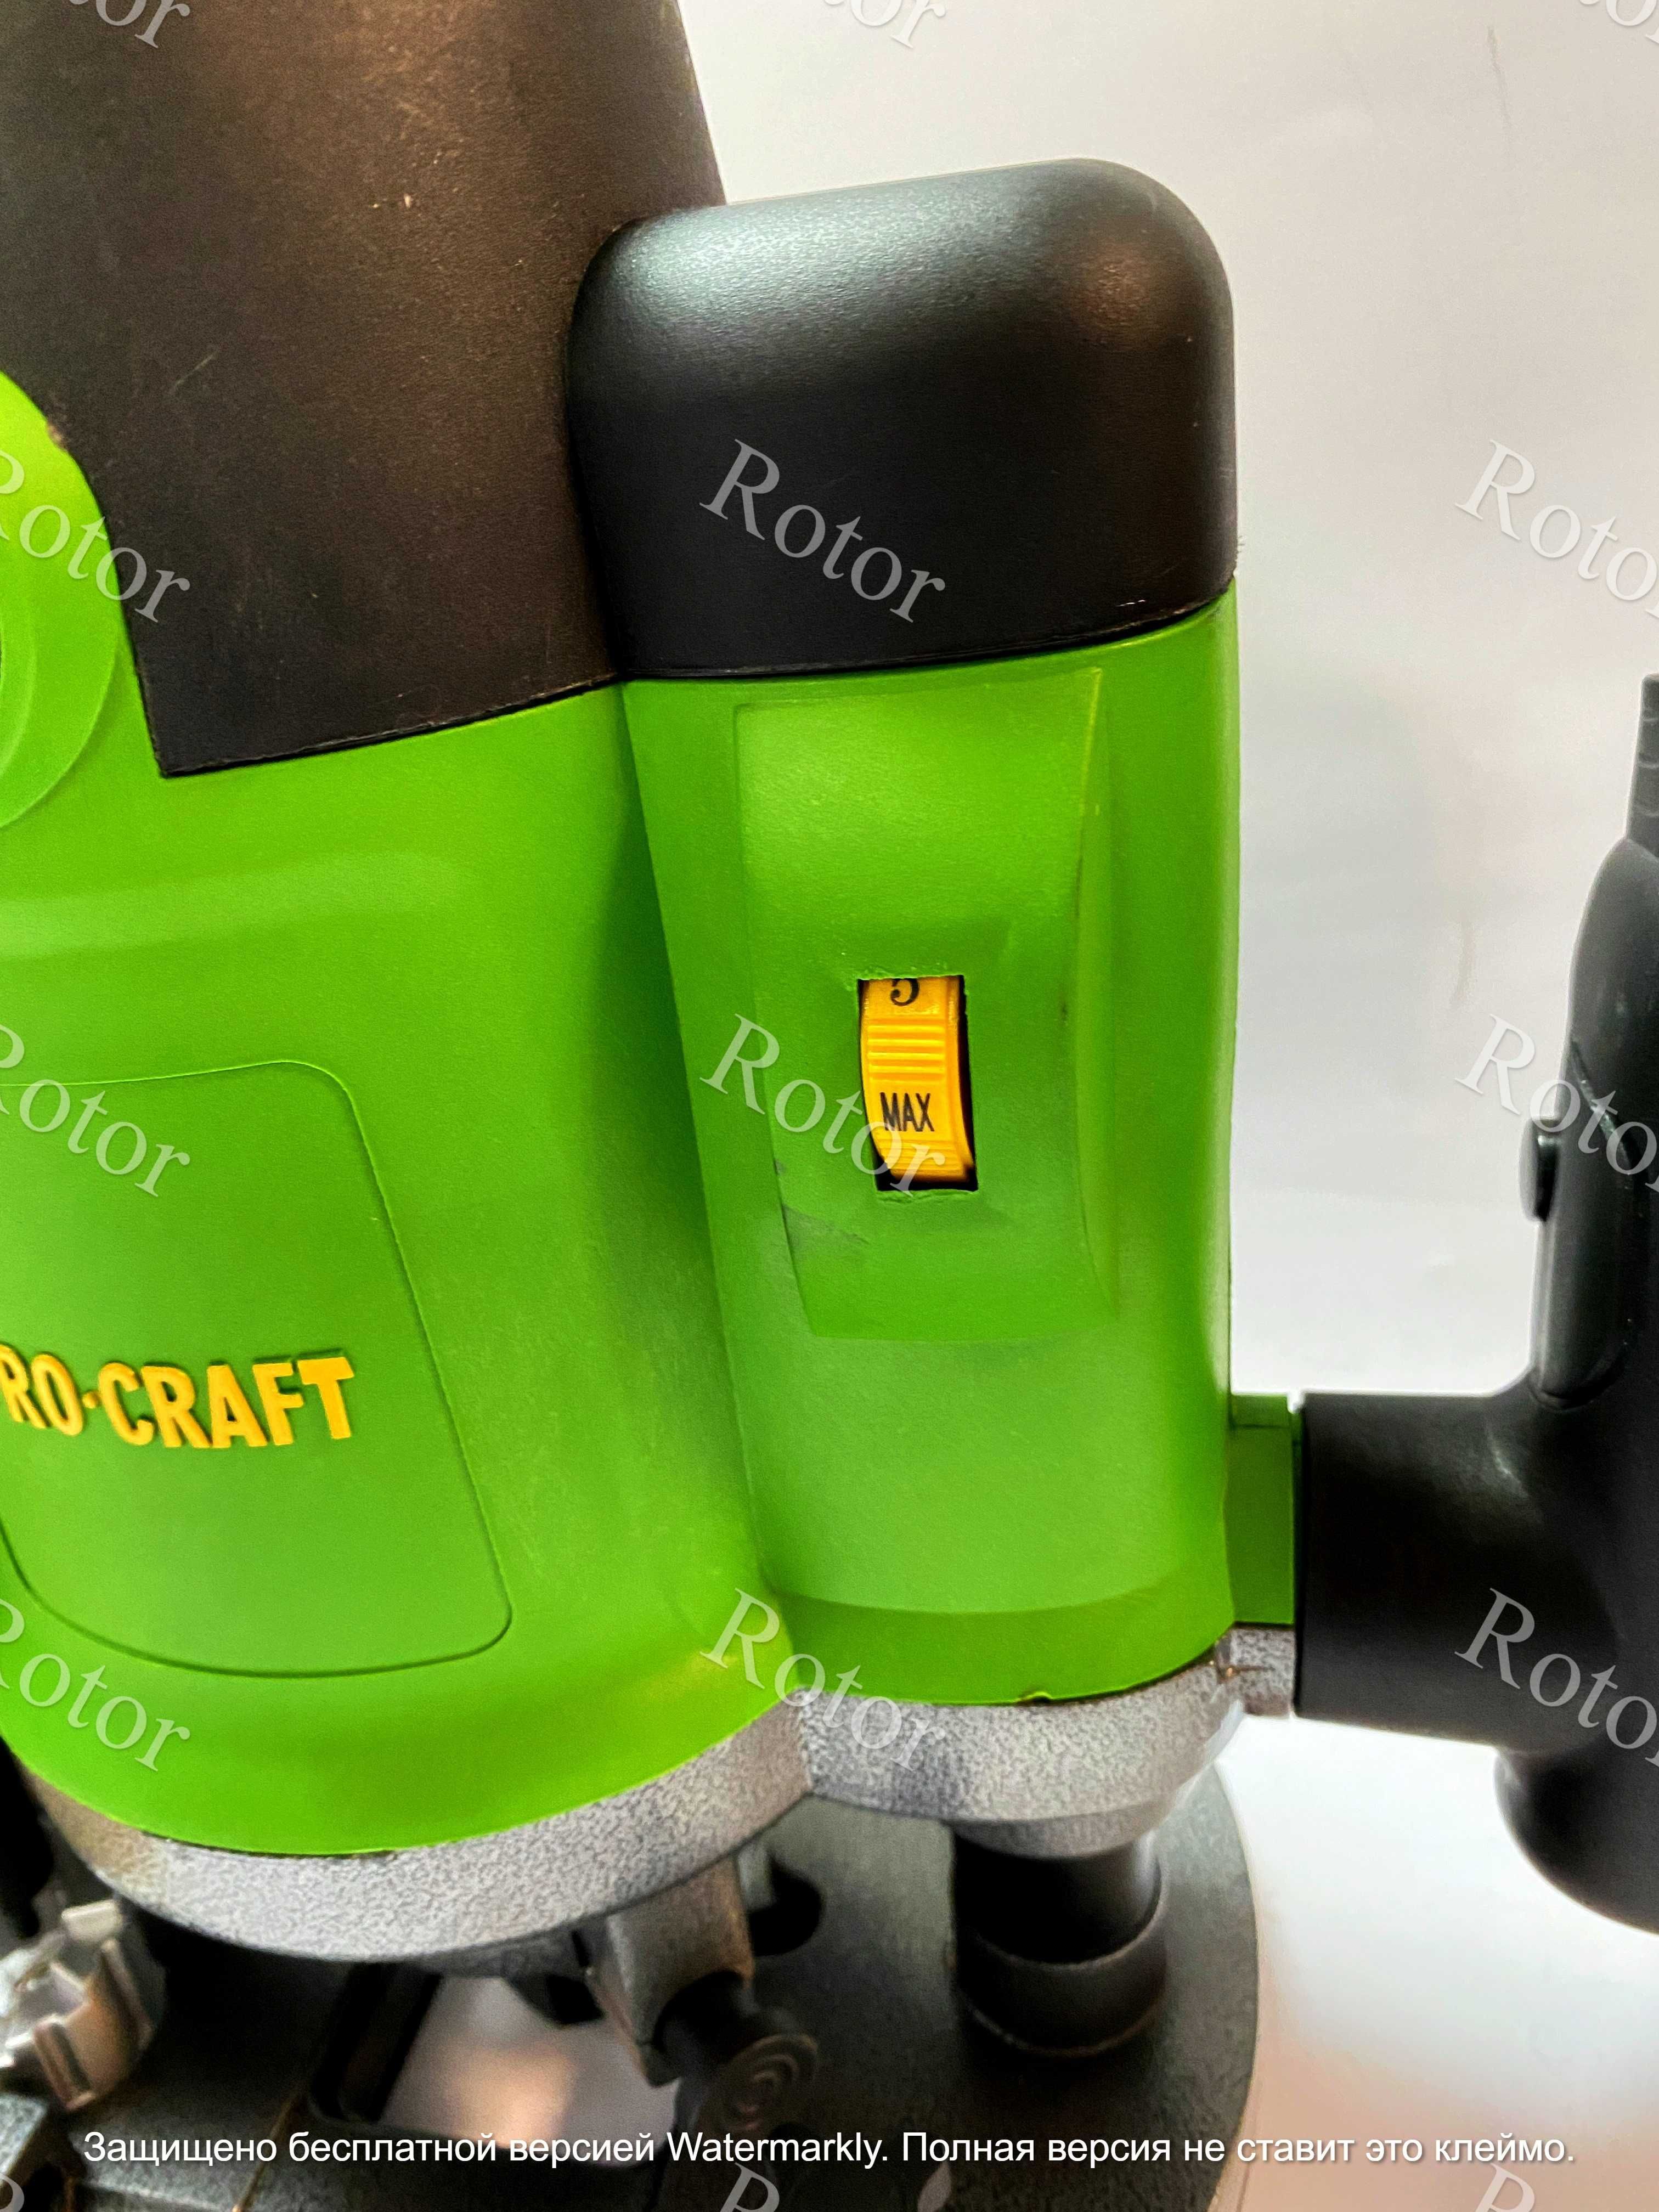 Фрезер ProCraft РОВ 1700 ProCraft POB 2400 с набором фрез 12 шт.